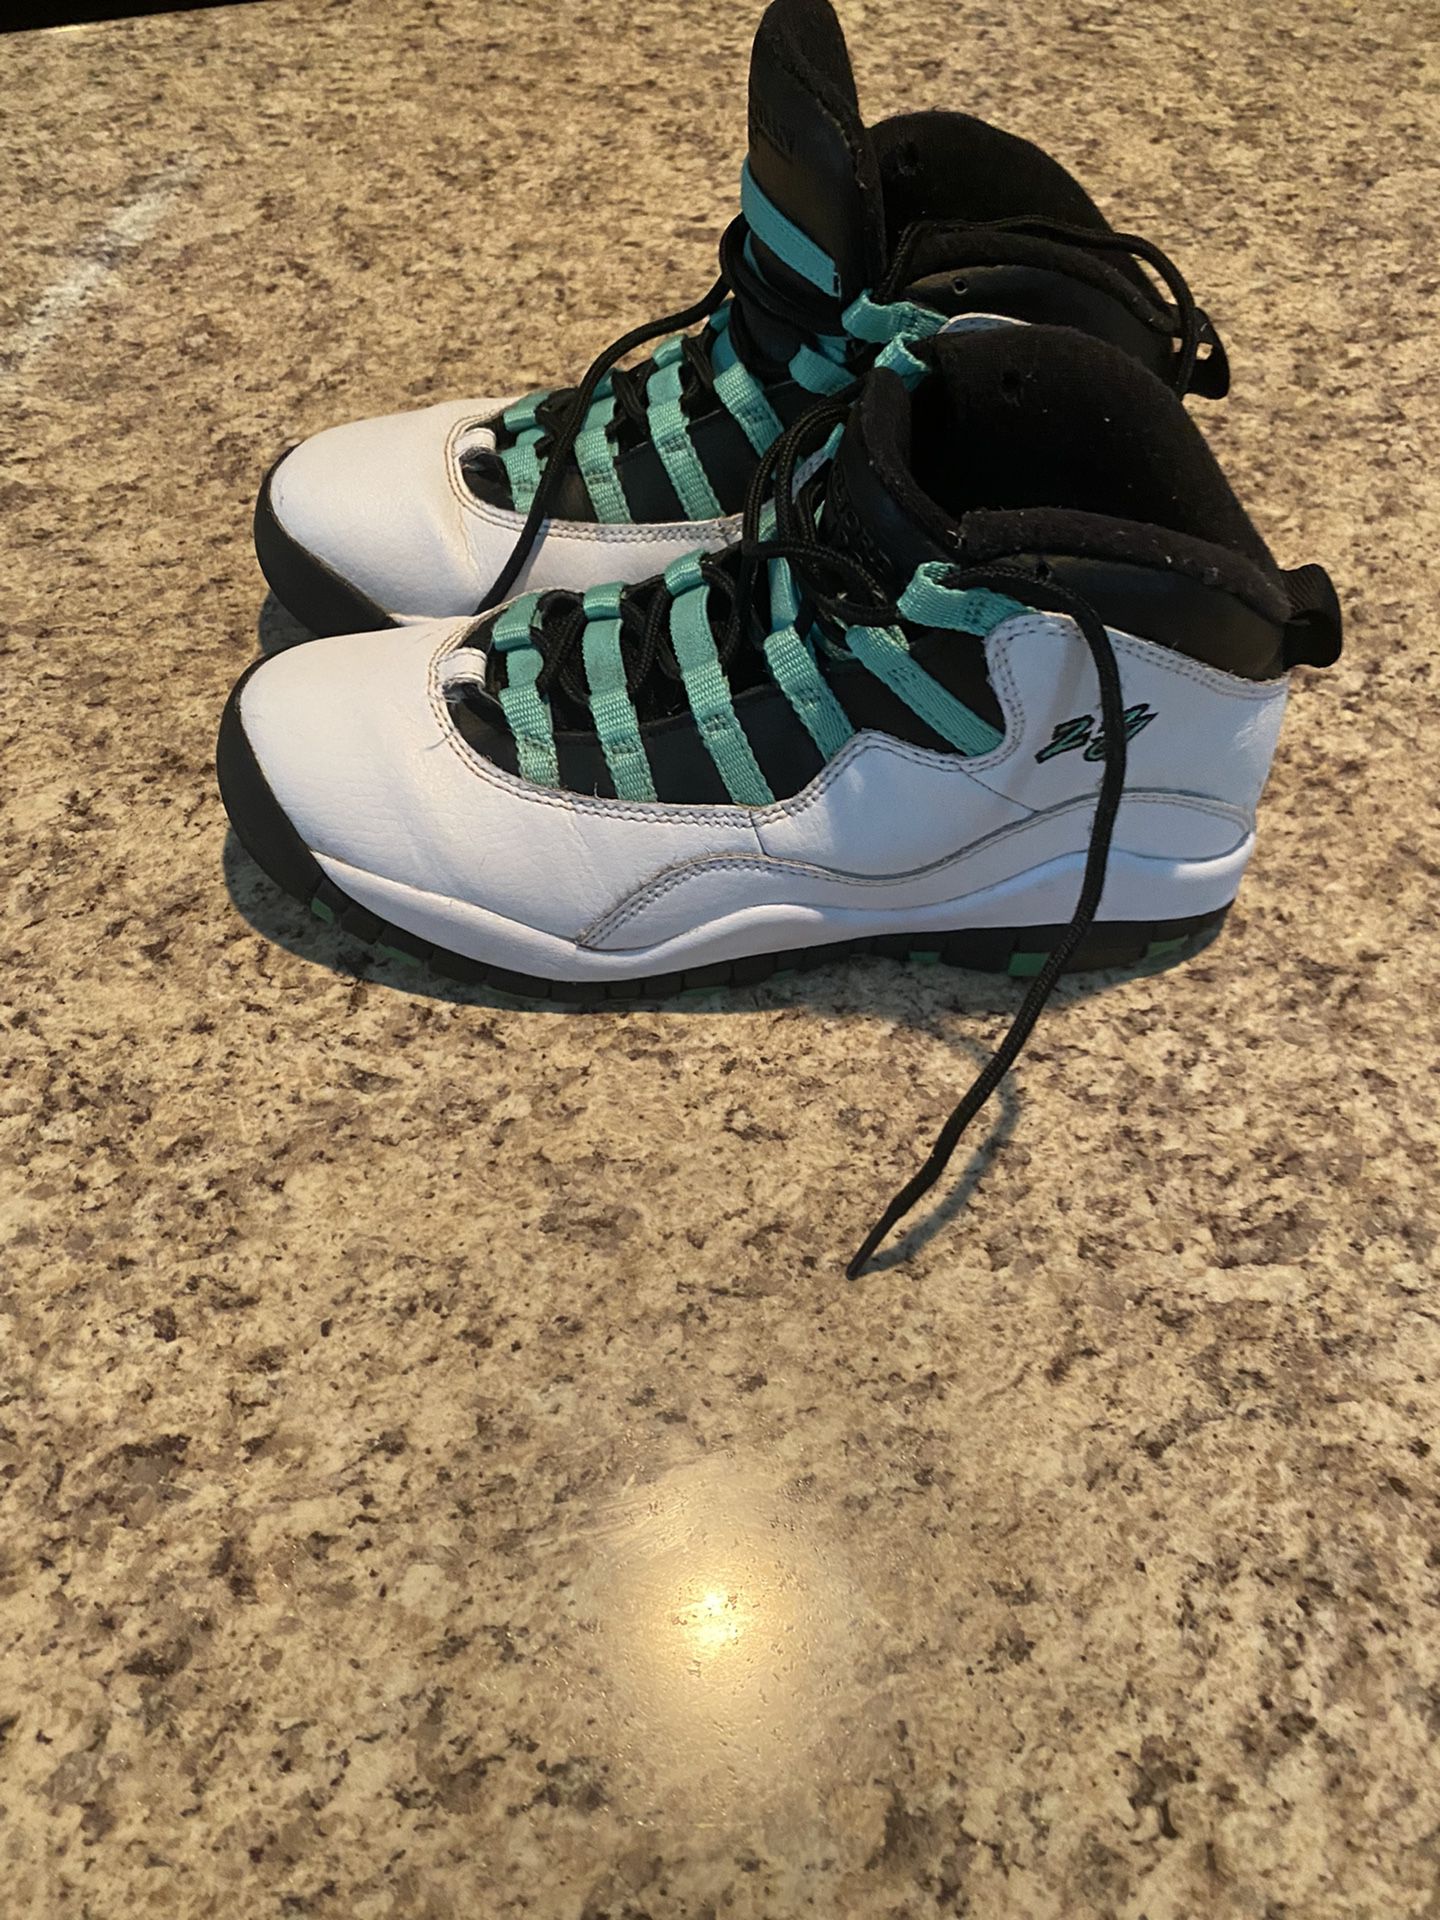 Air Jordan size 6 Y